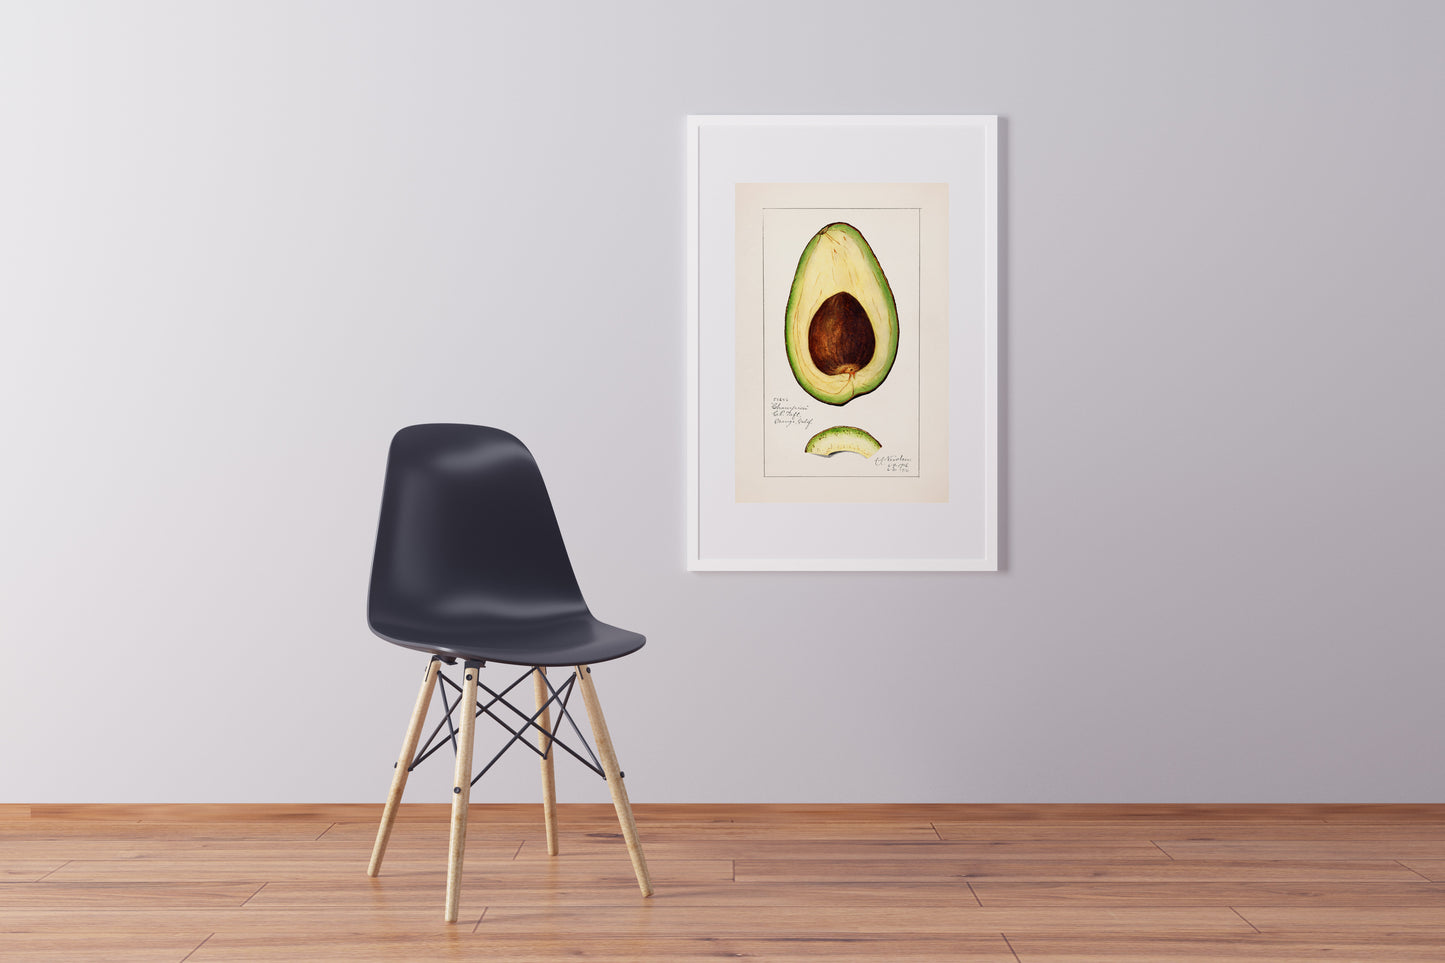 Vintage Avocado Art Print